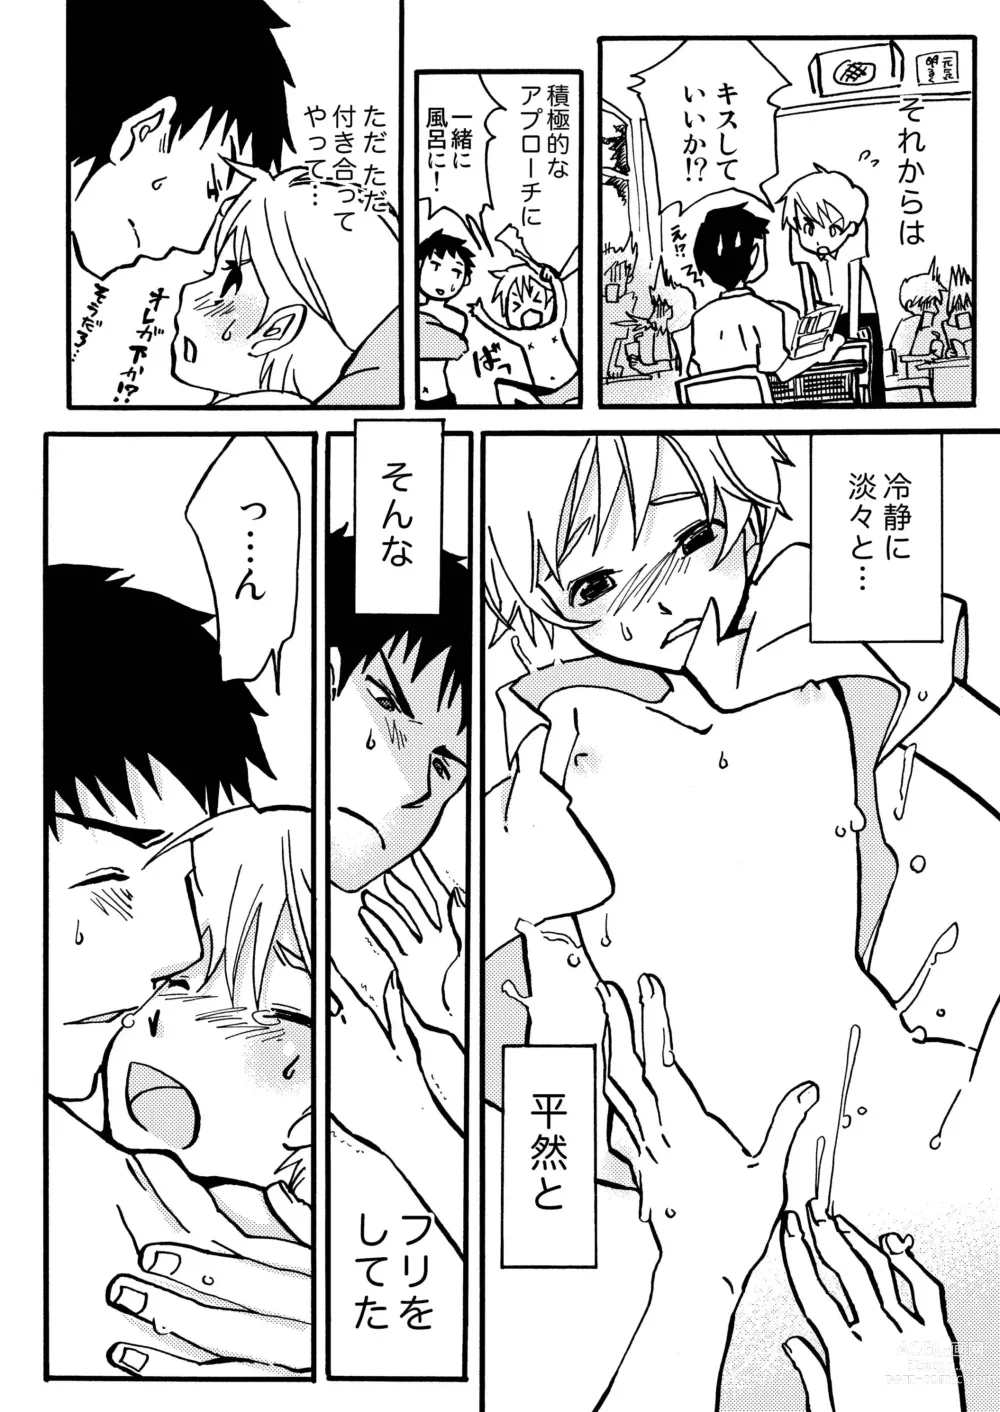 Page 40 of doujinshi Suki!